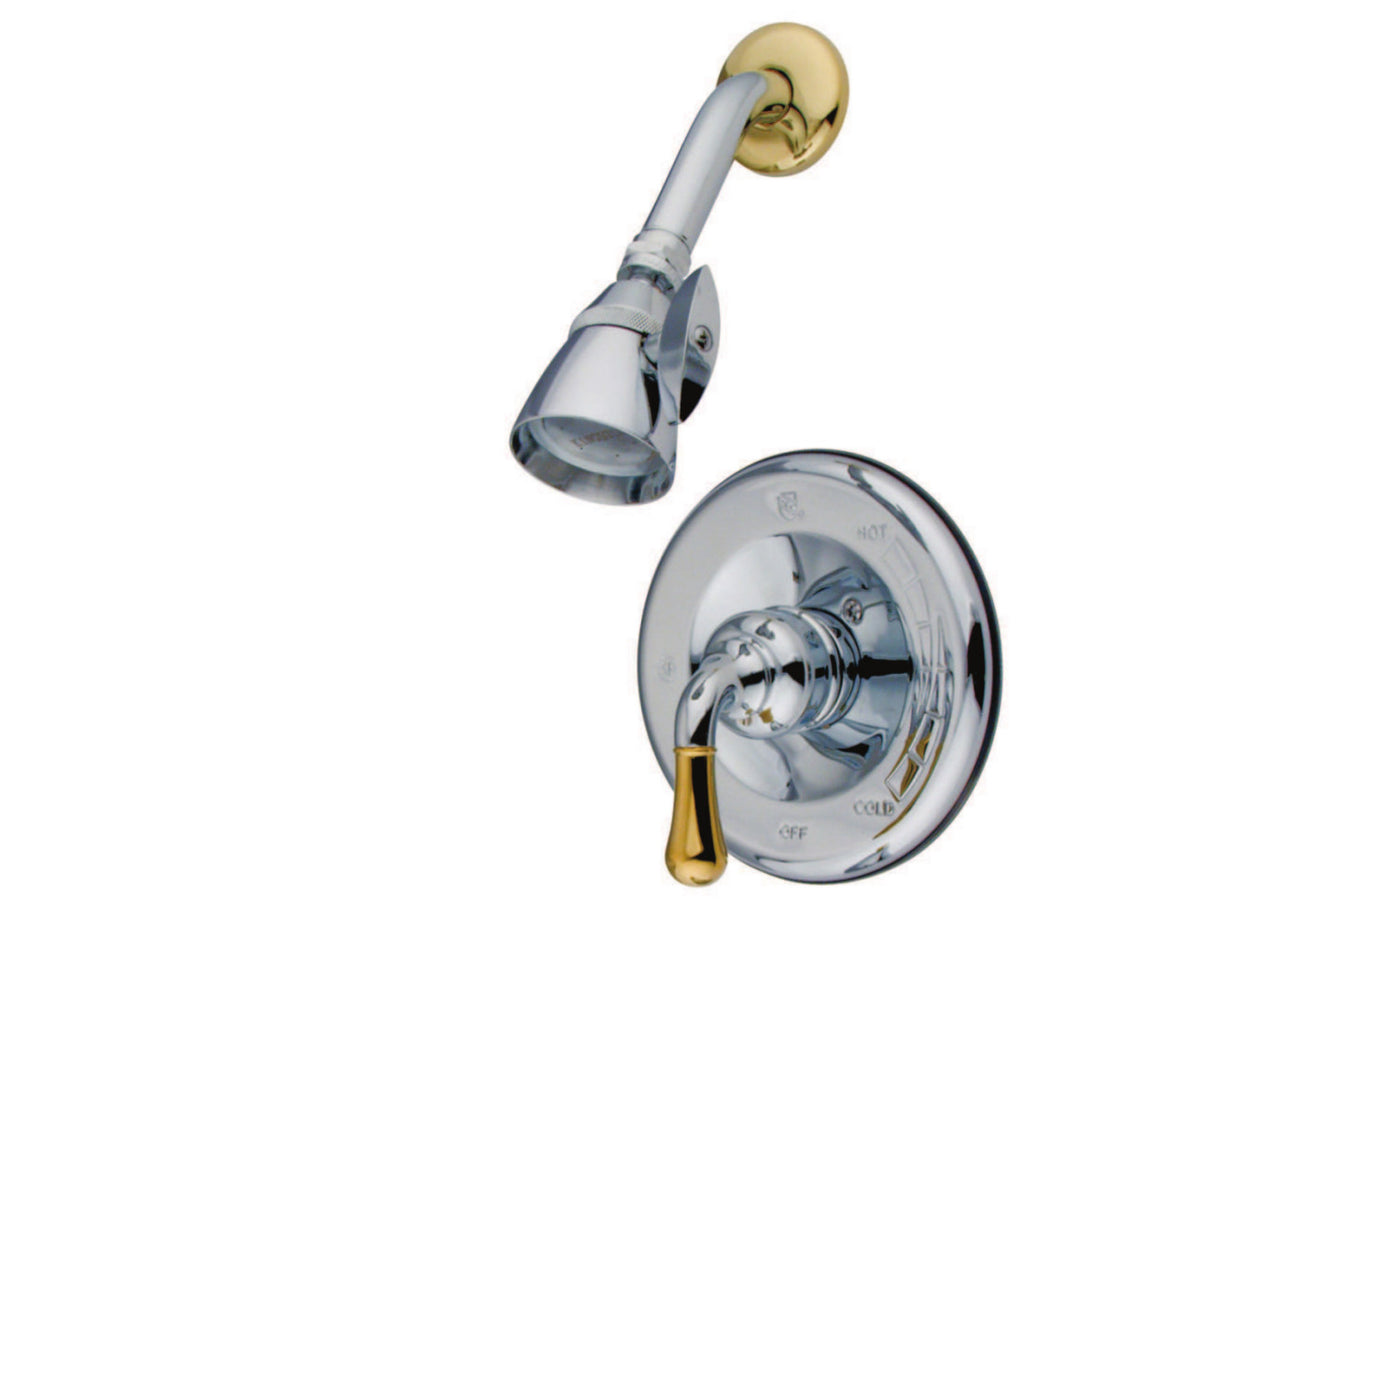 Elements of Design EB1634SO Pressure Balanced Shower Faucet, Polished Chrome/Polished Brass